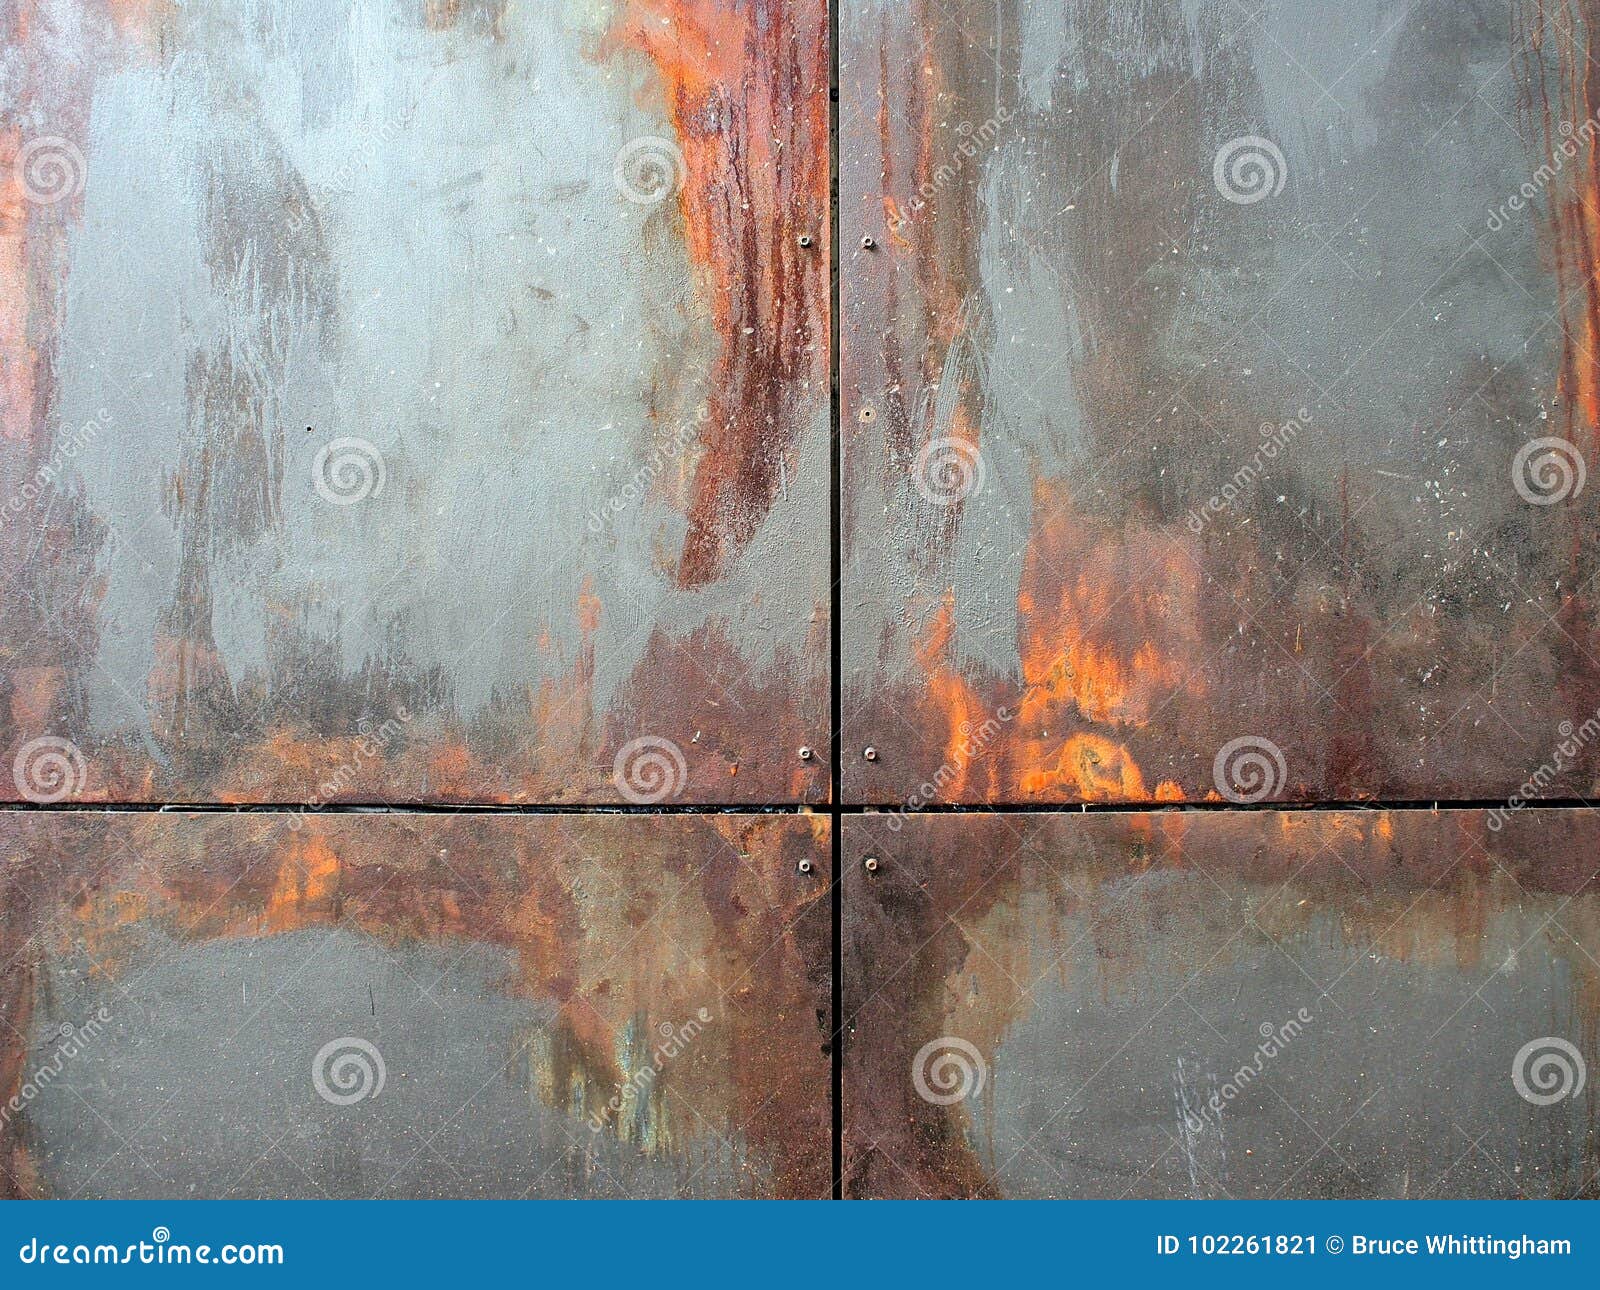 Can sheet metal rust фото 58